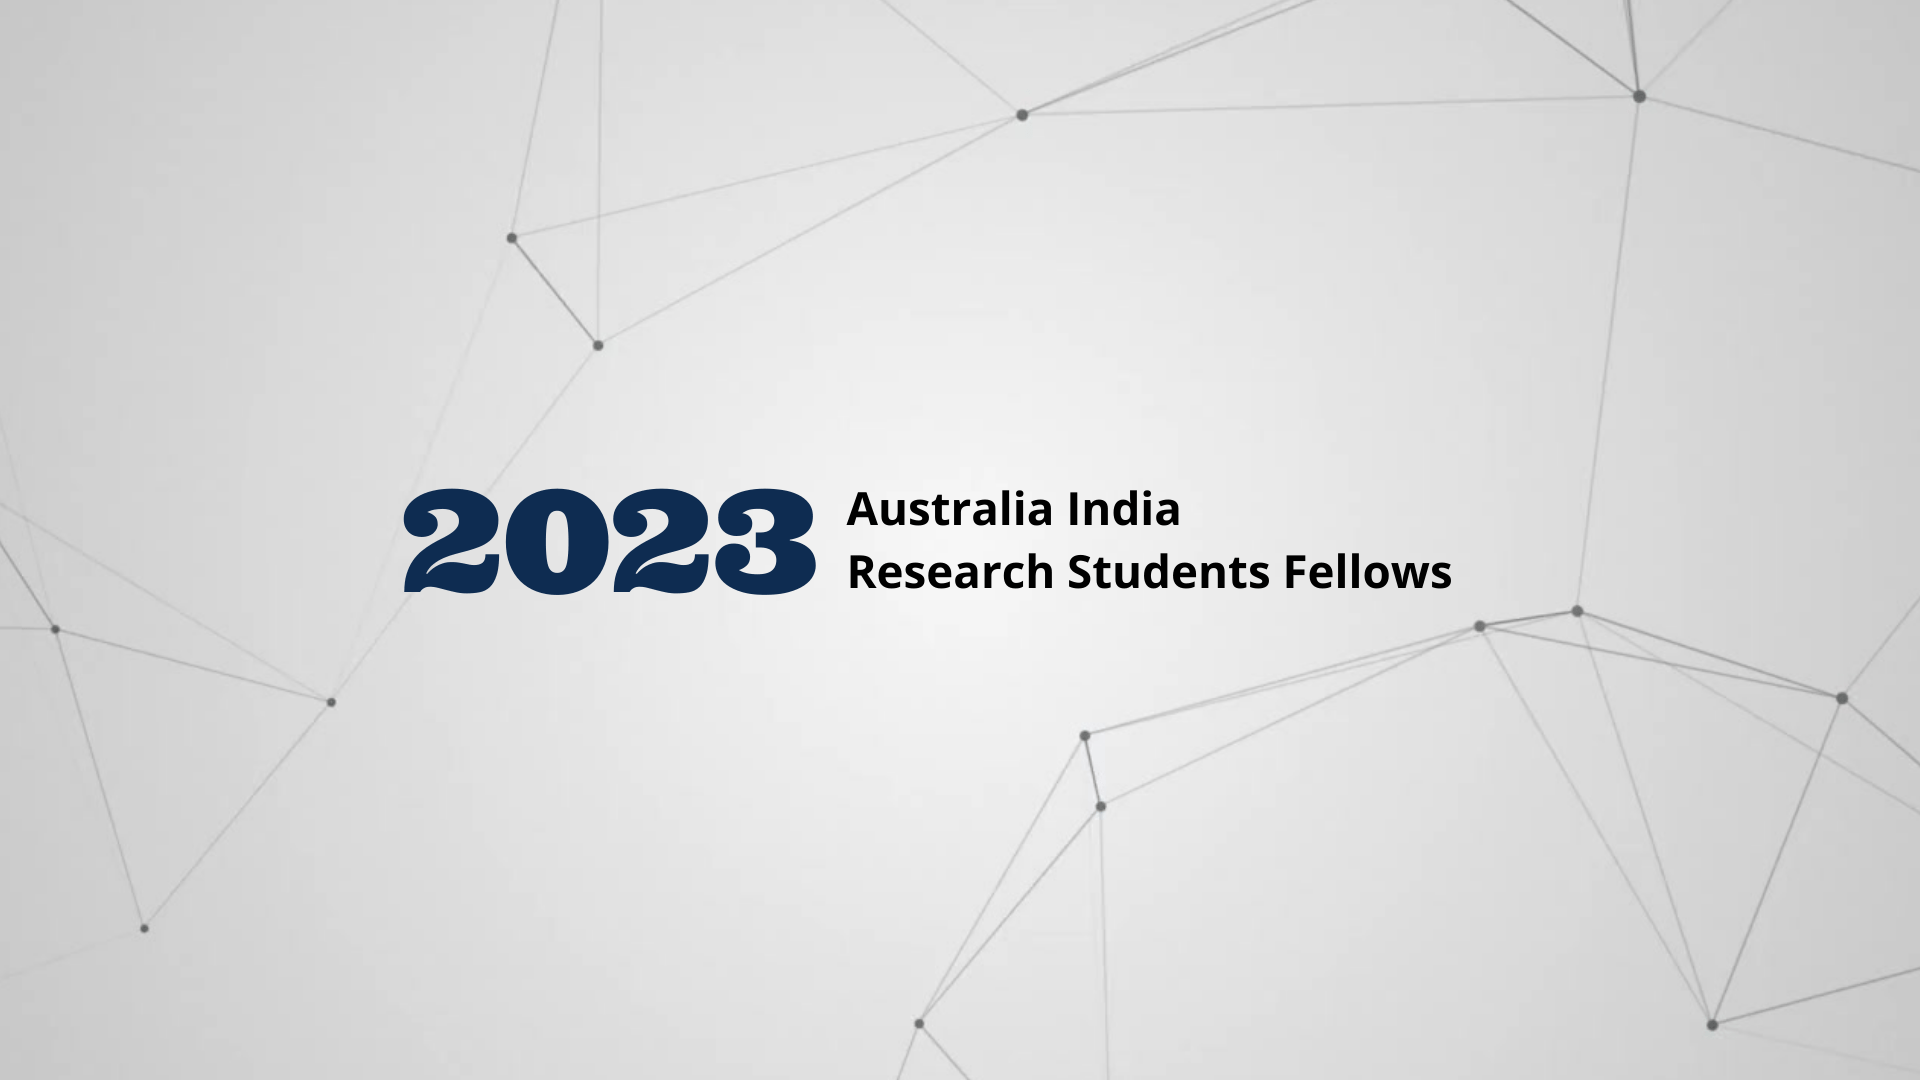 Meet the 2023 Australia India Research Students Fellows